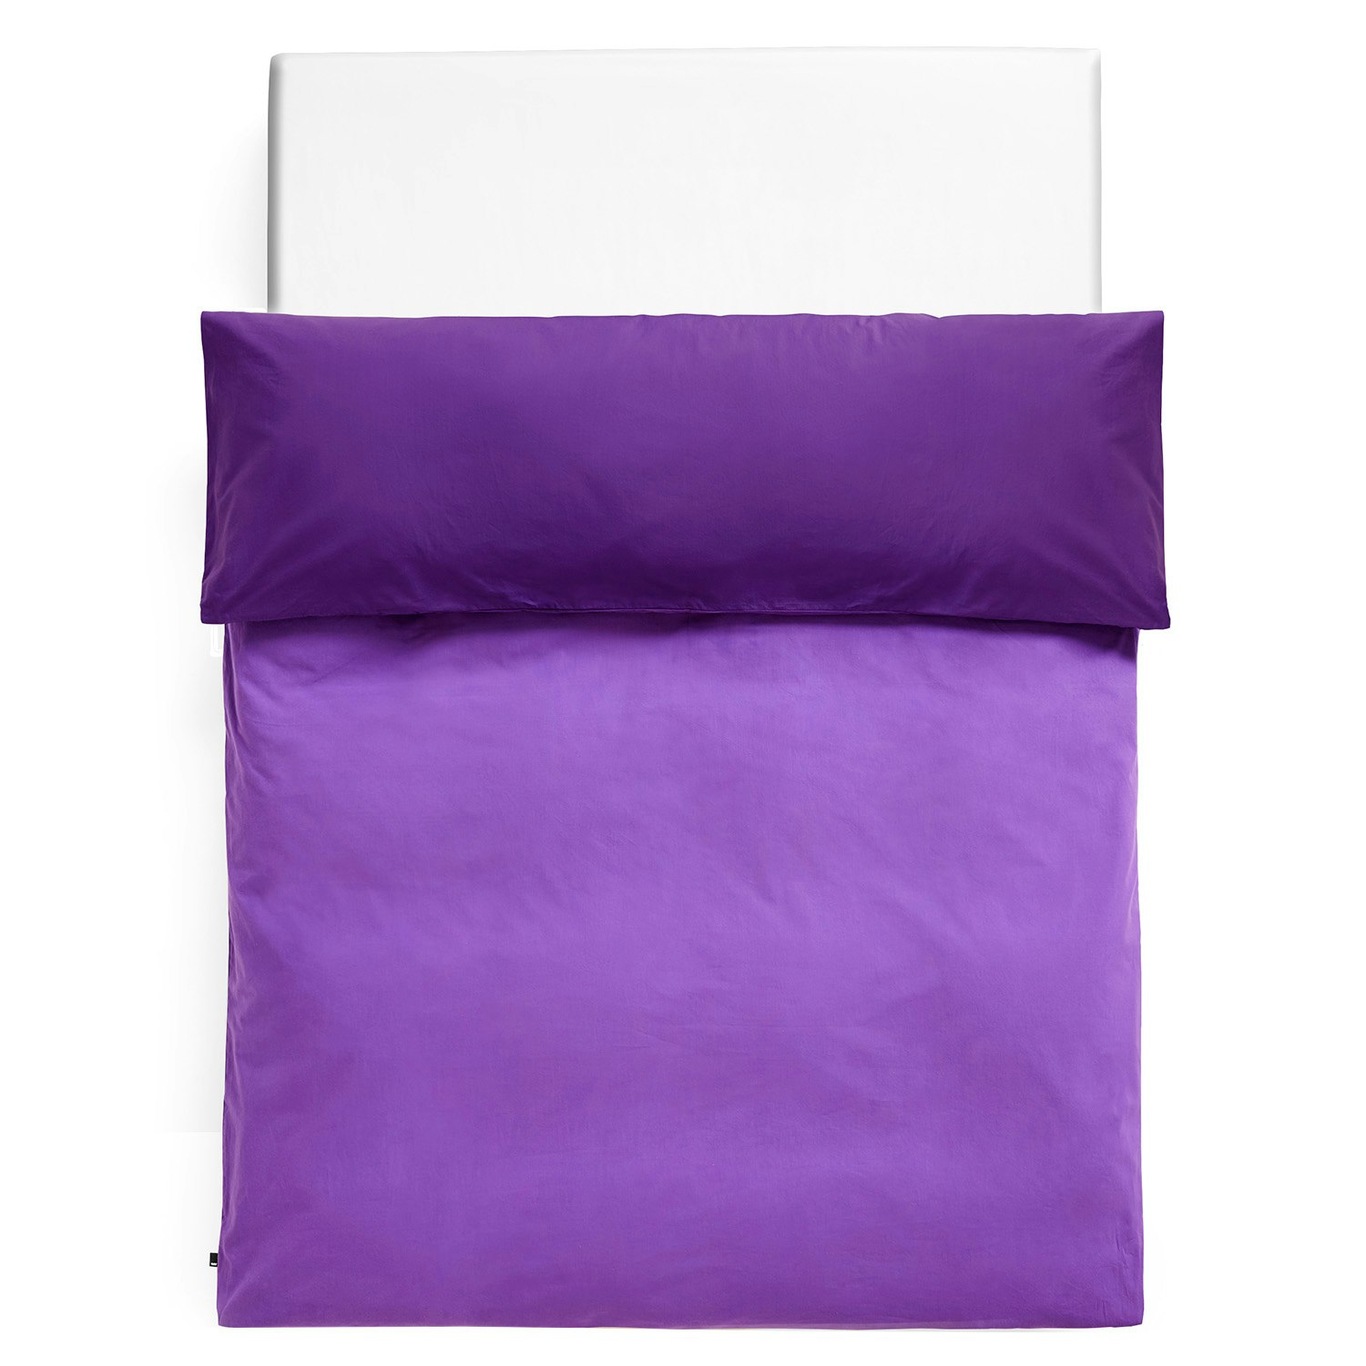 Duo Påslakan 220x220 cm, Vivid Purple